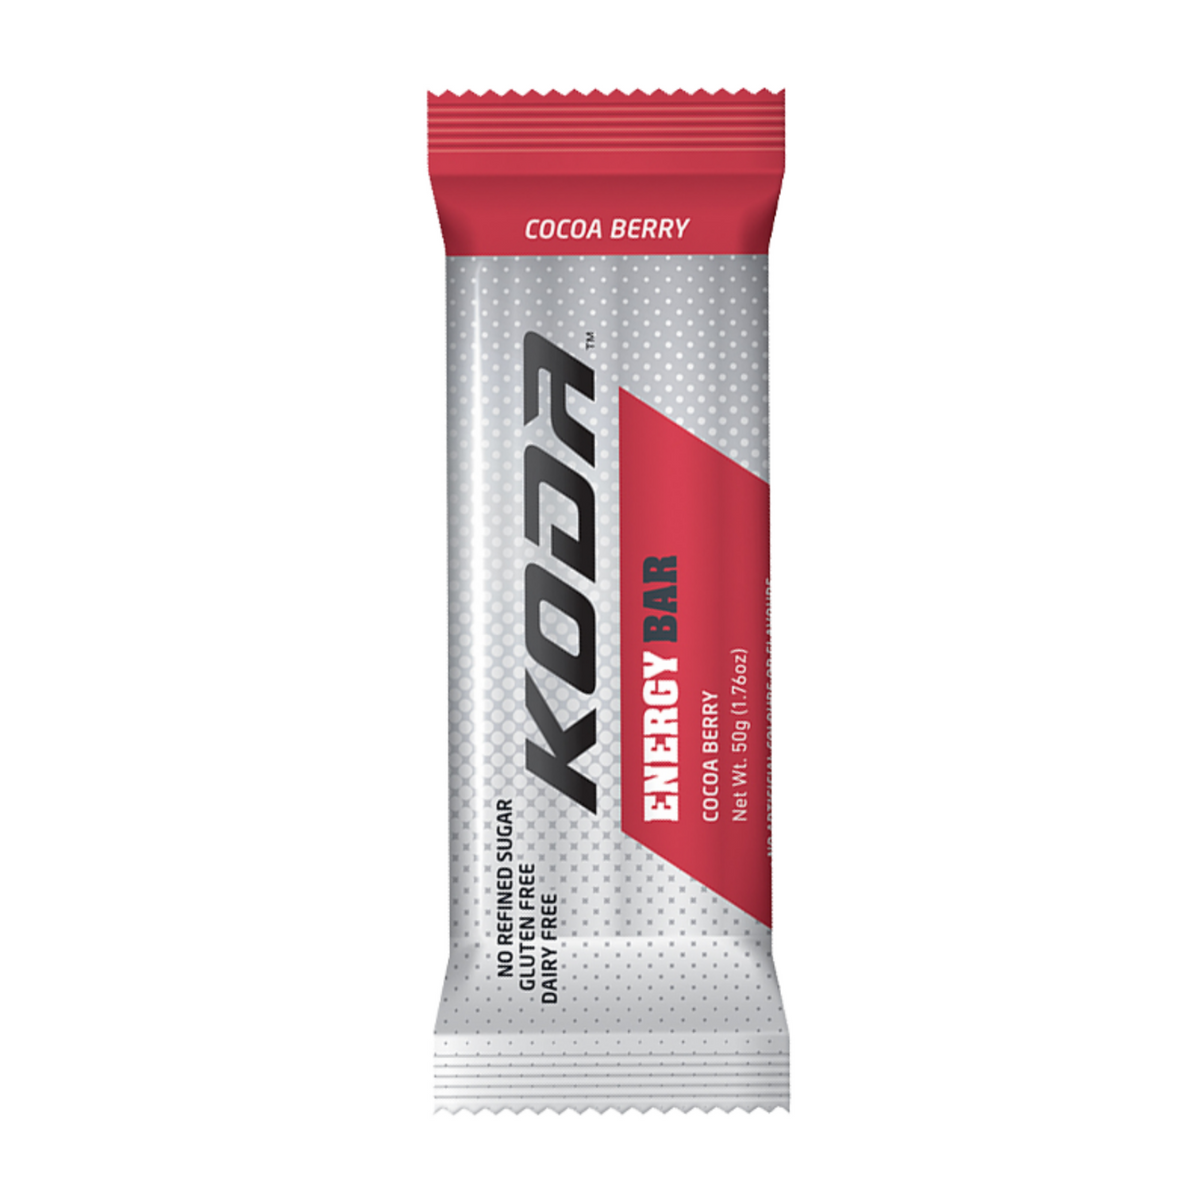 KODA Nutrition Cocoa Berry Energy Bar